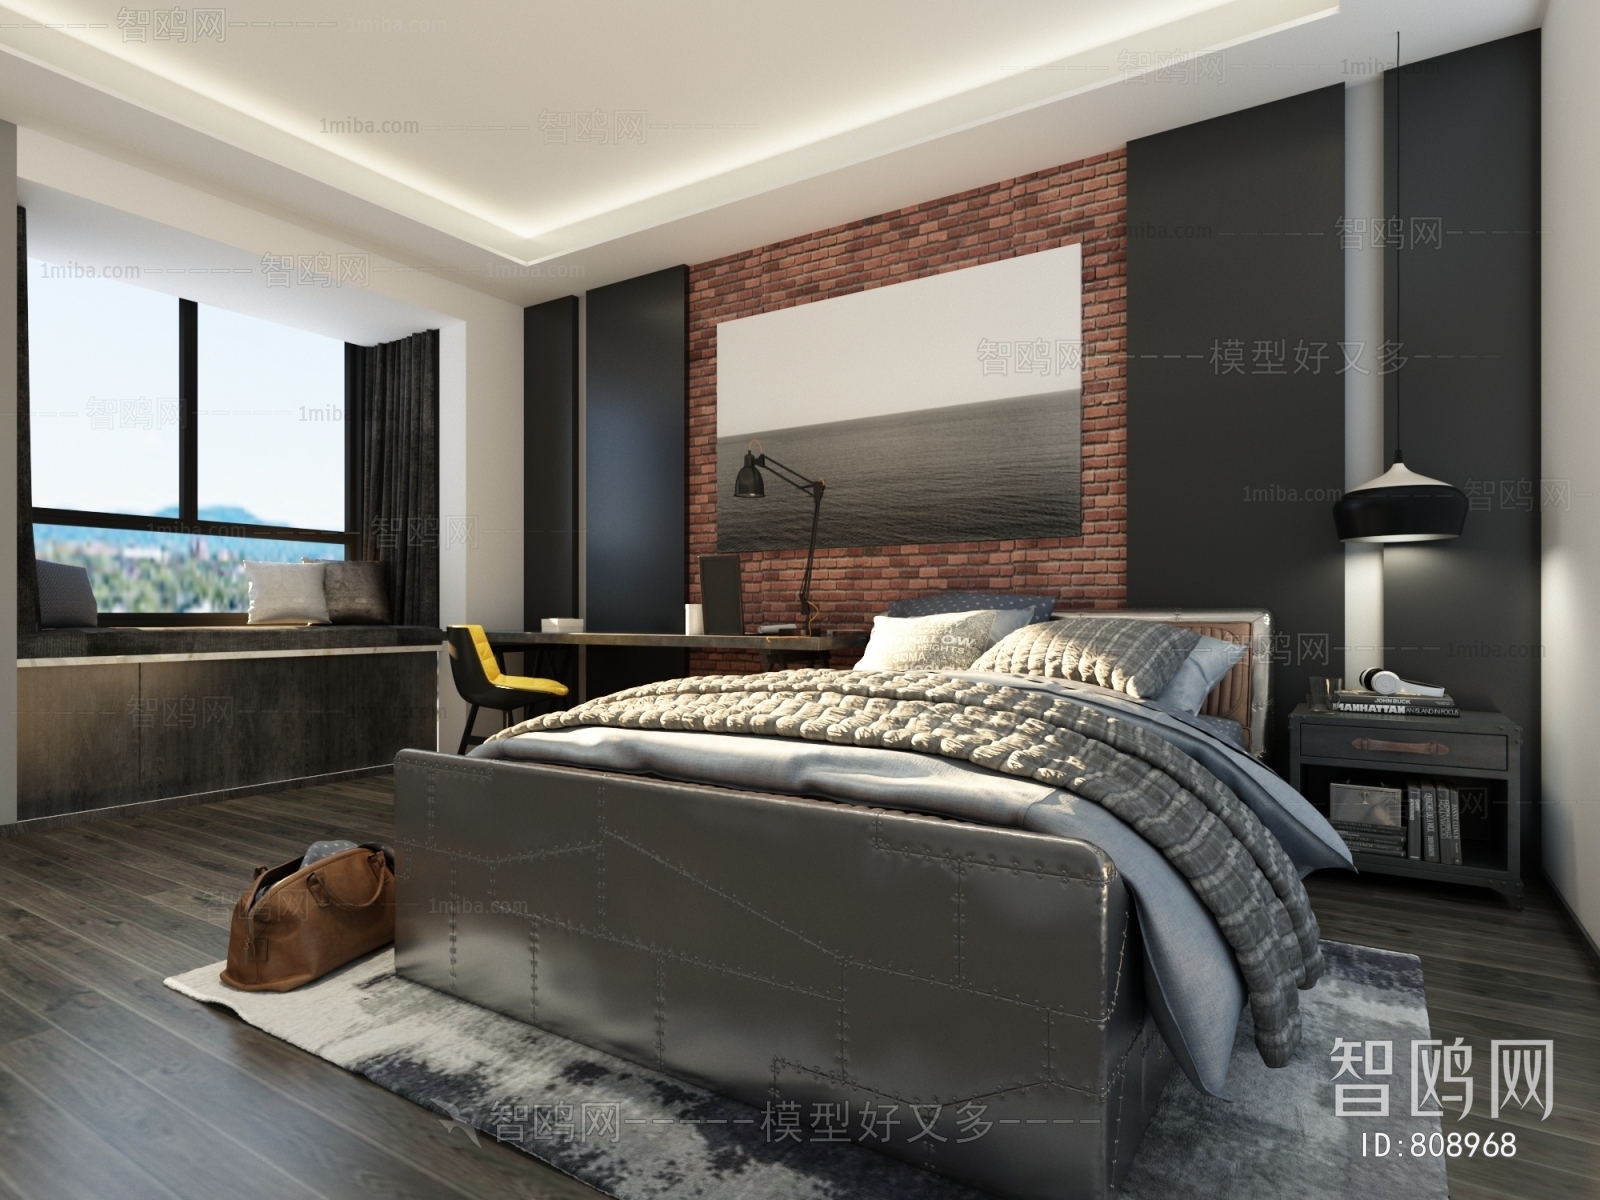 Industrial Style Bedroom